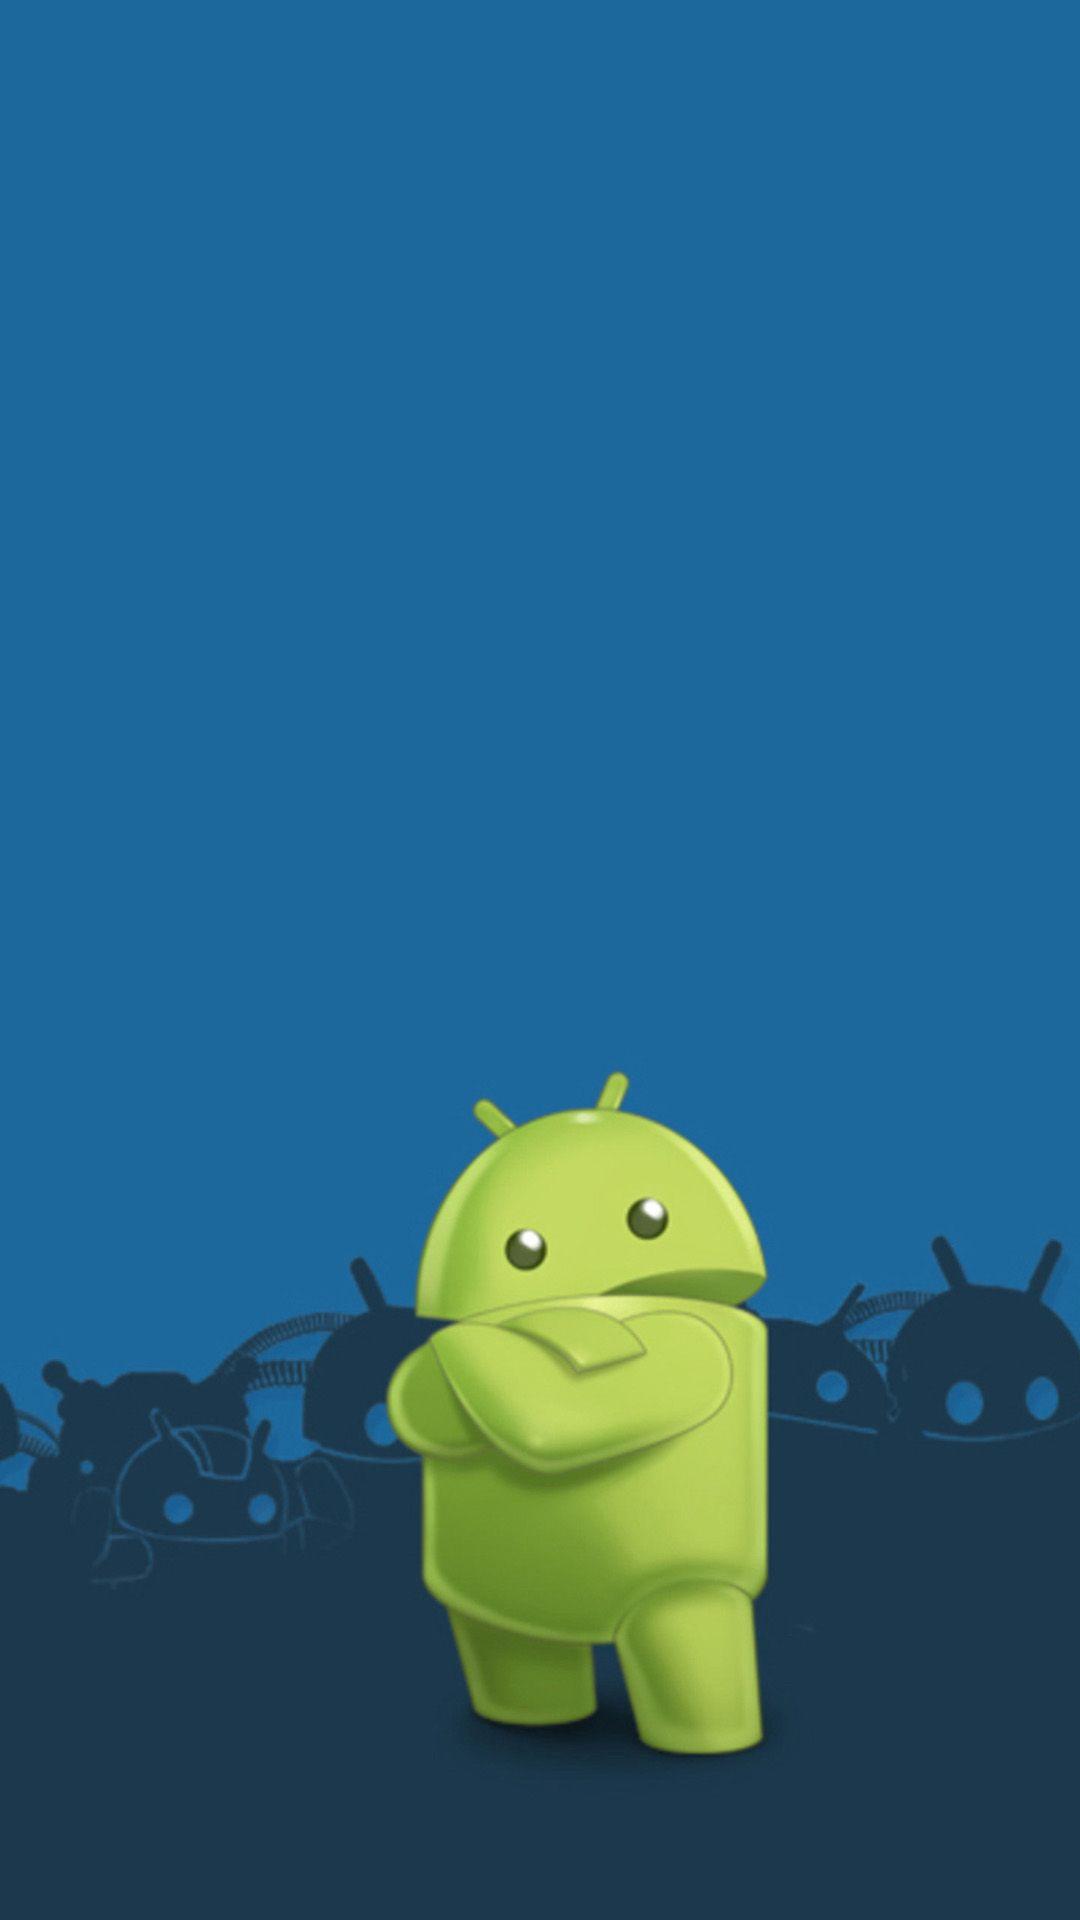 3D Android LOGO 05 Galaxy S5 Wallpaper HD